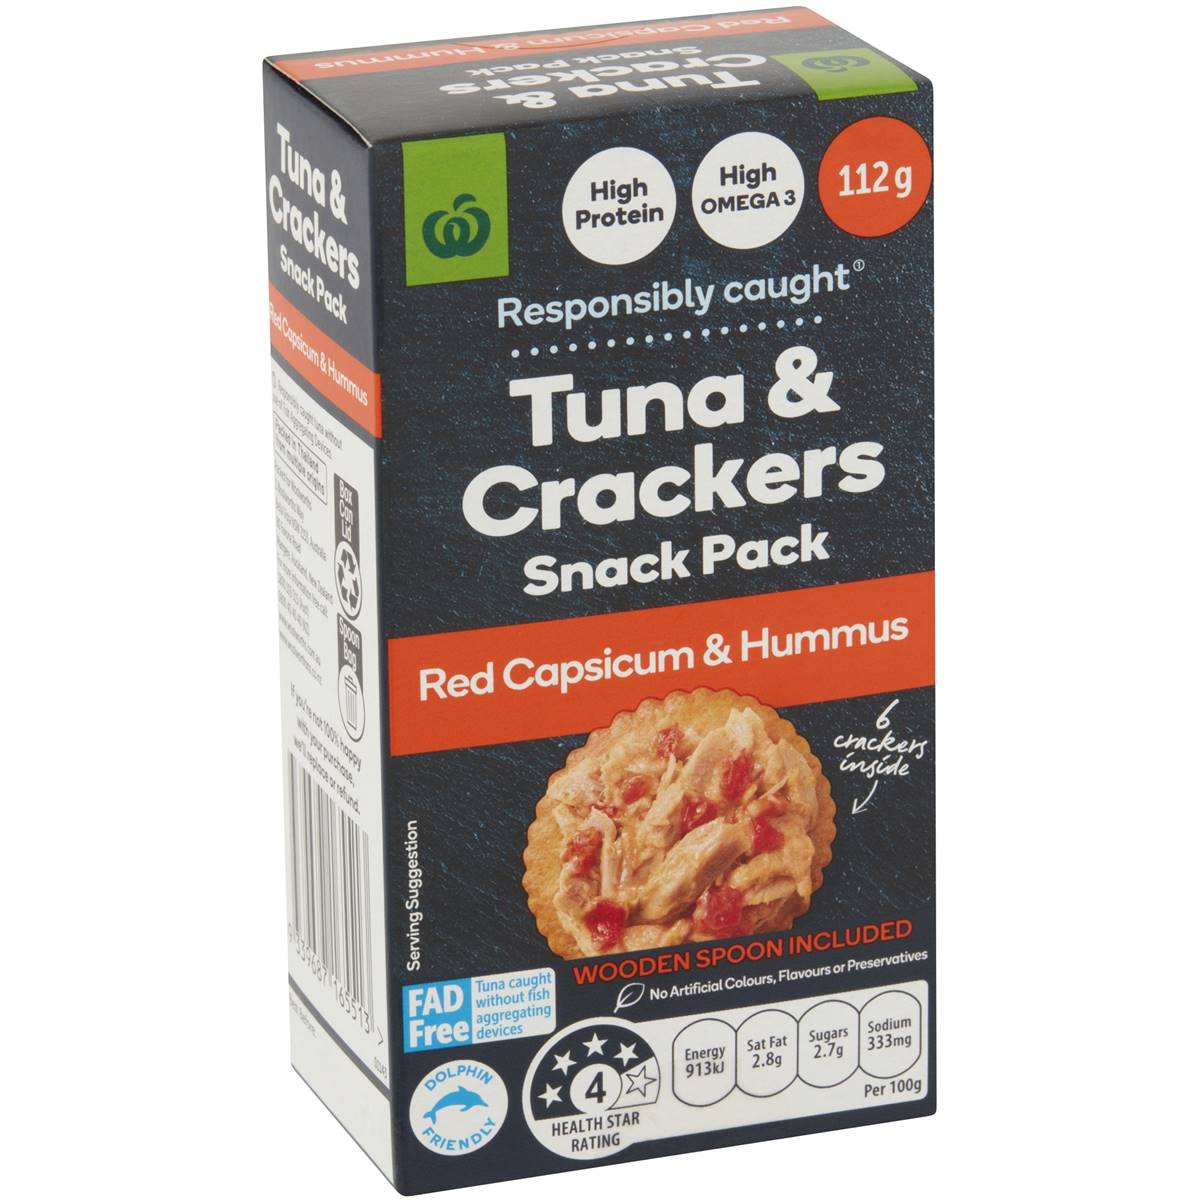 Calories in Woolworths Tuna & Crackers Snack Pack Red Capsicum & Hummus